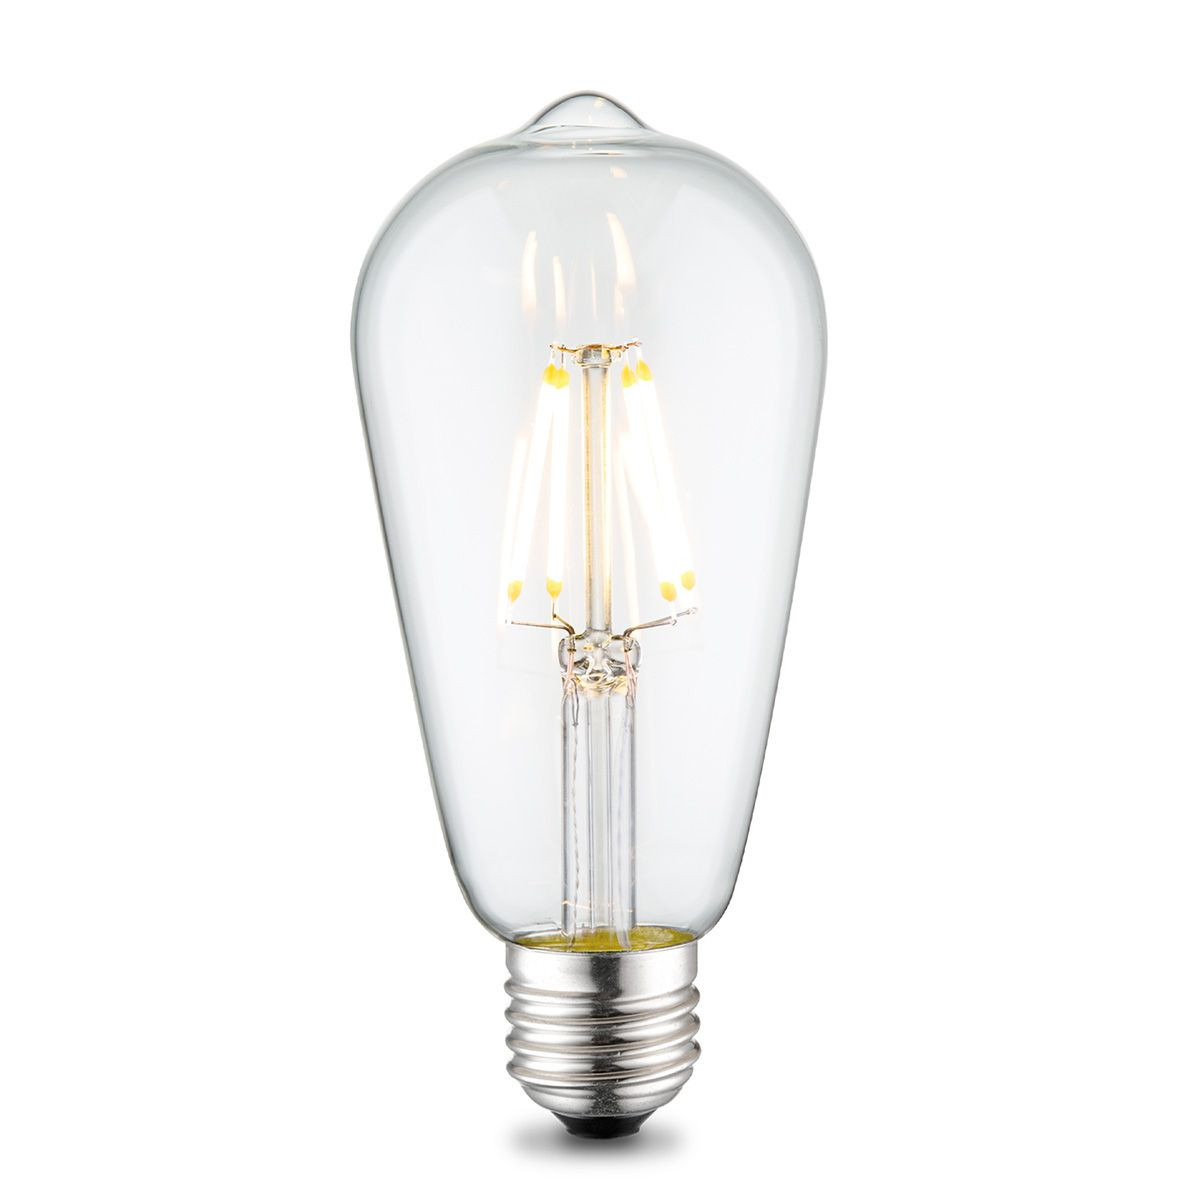 Edison Vintage LED lamp E27 LED filament lichtbron, Deco Drop ST64, 6.4/6.4/14cm, Helder, Retro LED lamp Dimbaar, 4W 440lm 3000K, warm wit licht, geschikt voor E27 fitting